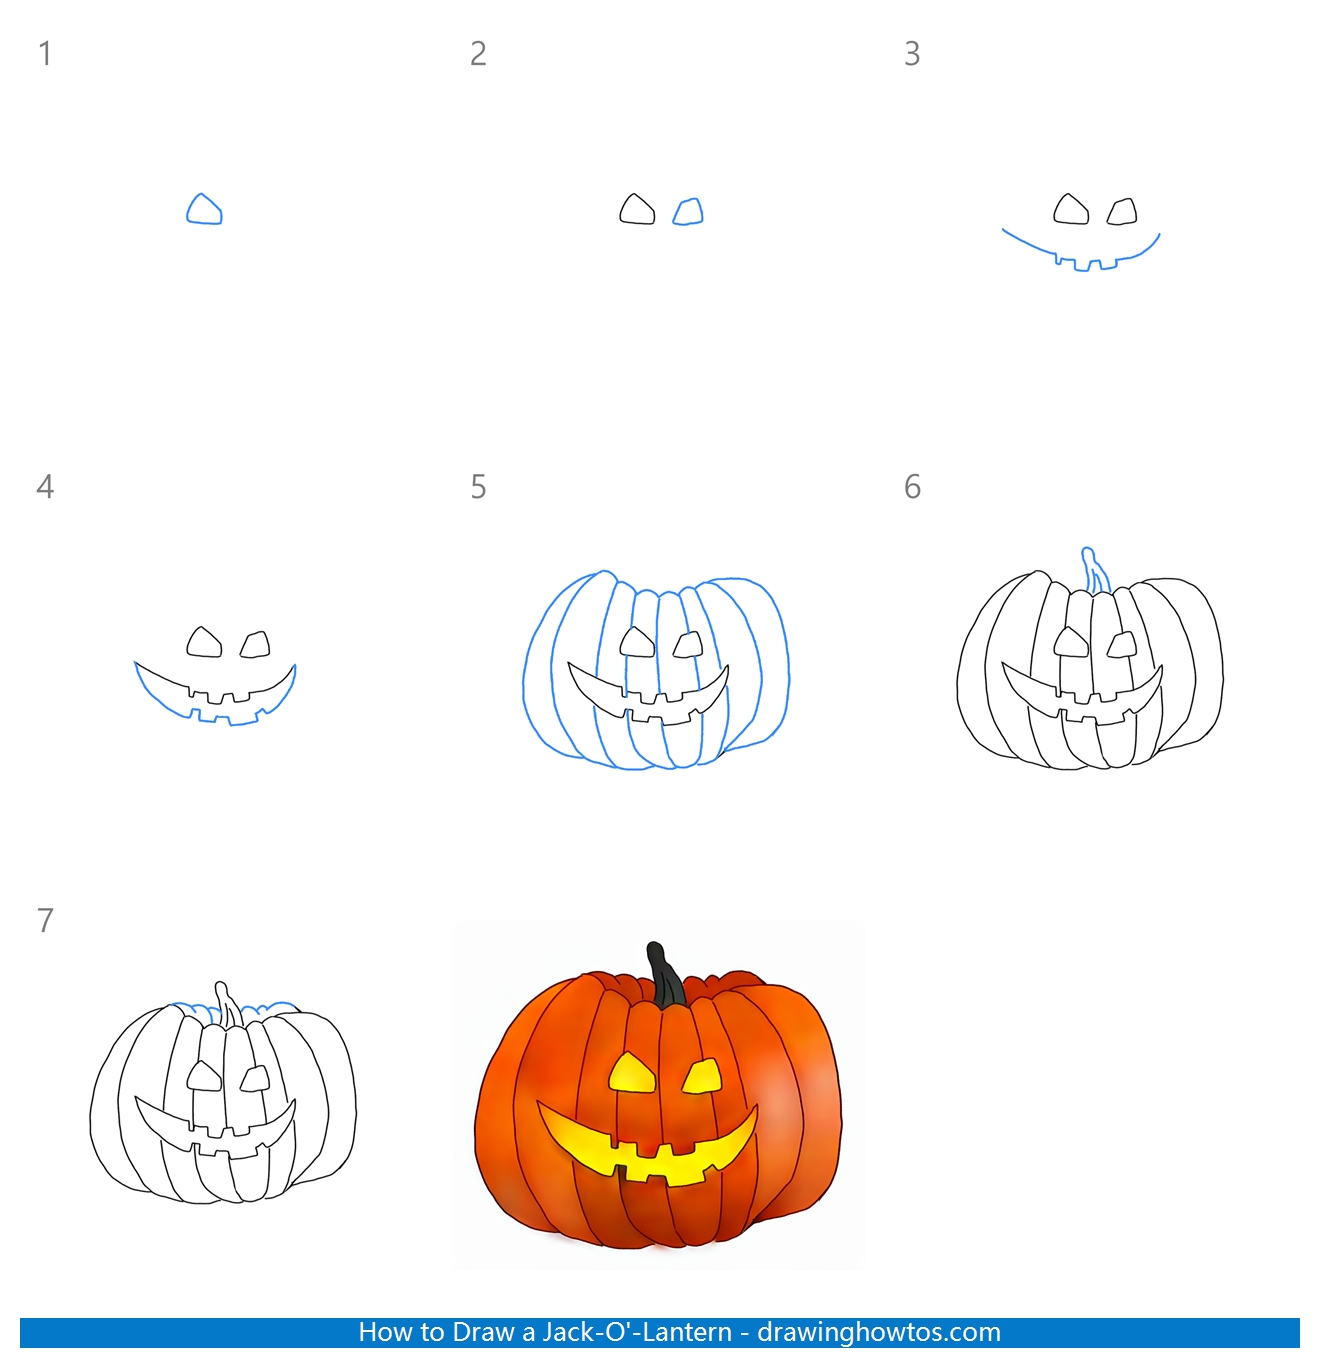 How to Draw a Halloween Pumpkin Jack-o-Lantern Step by Step